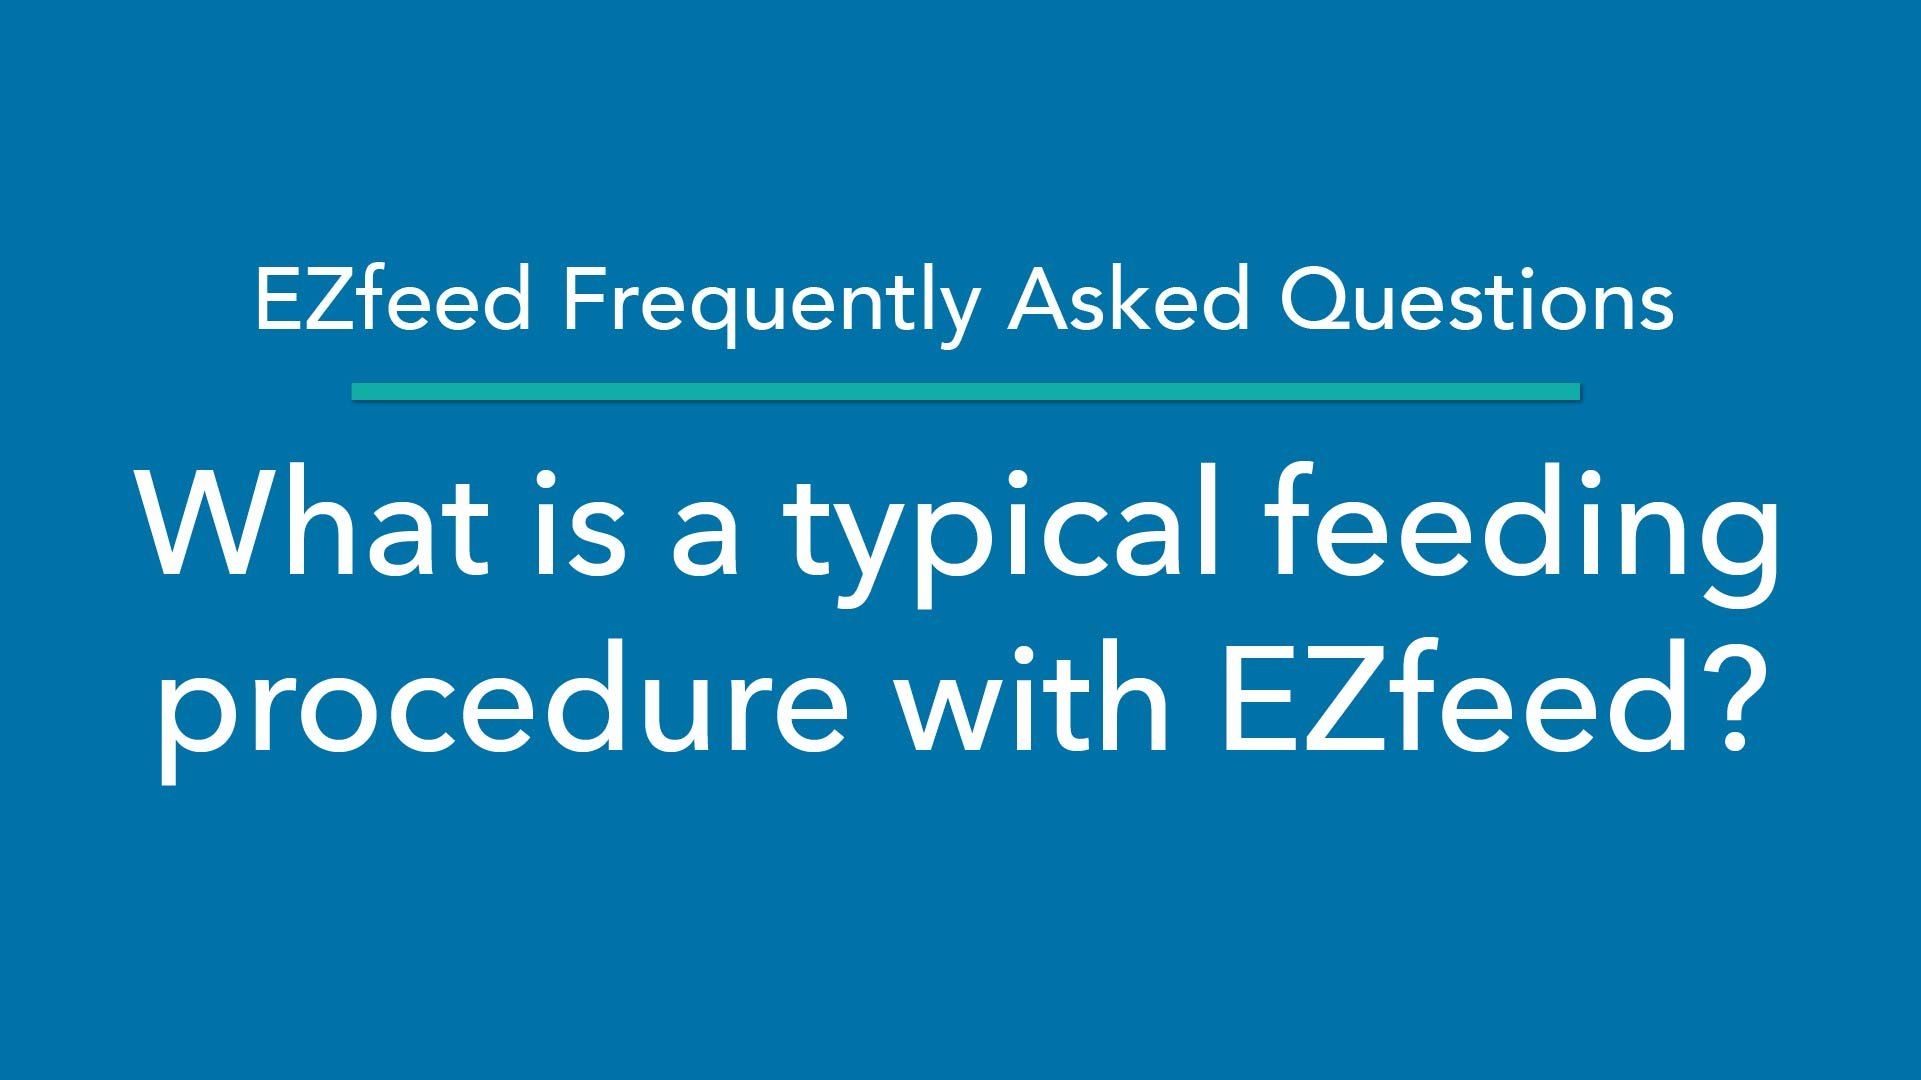 Typical feeding procedure with EZfeed